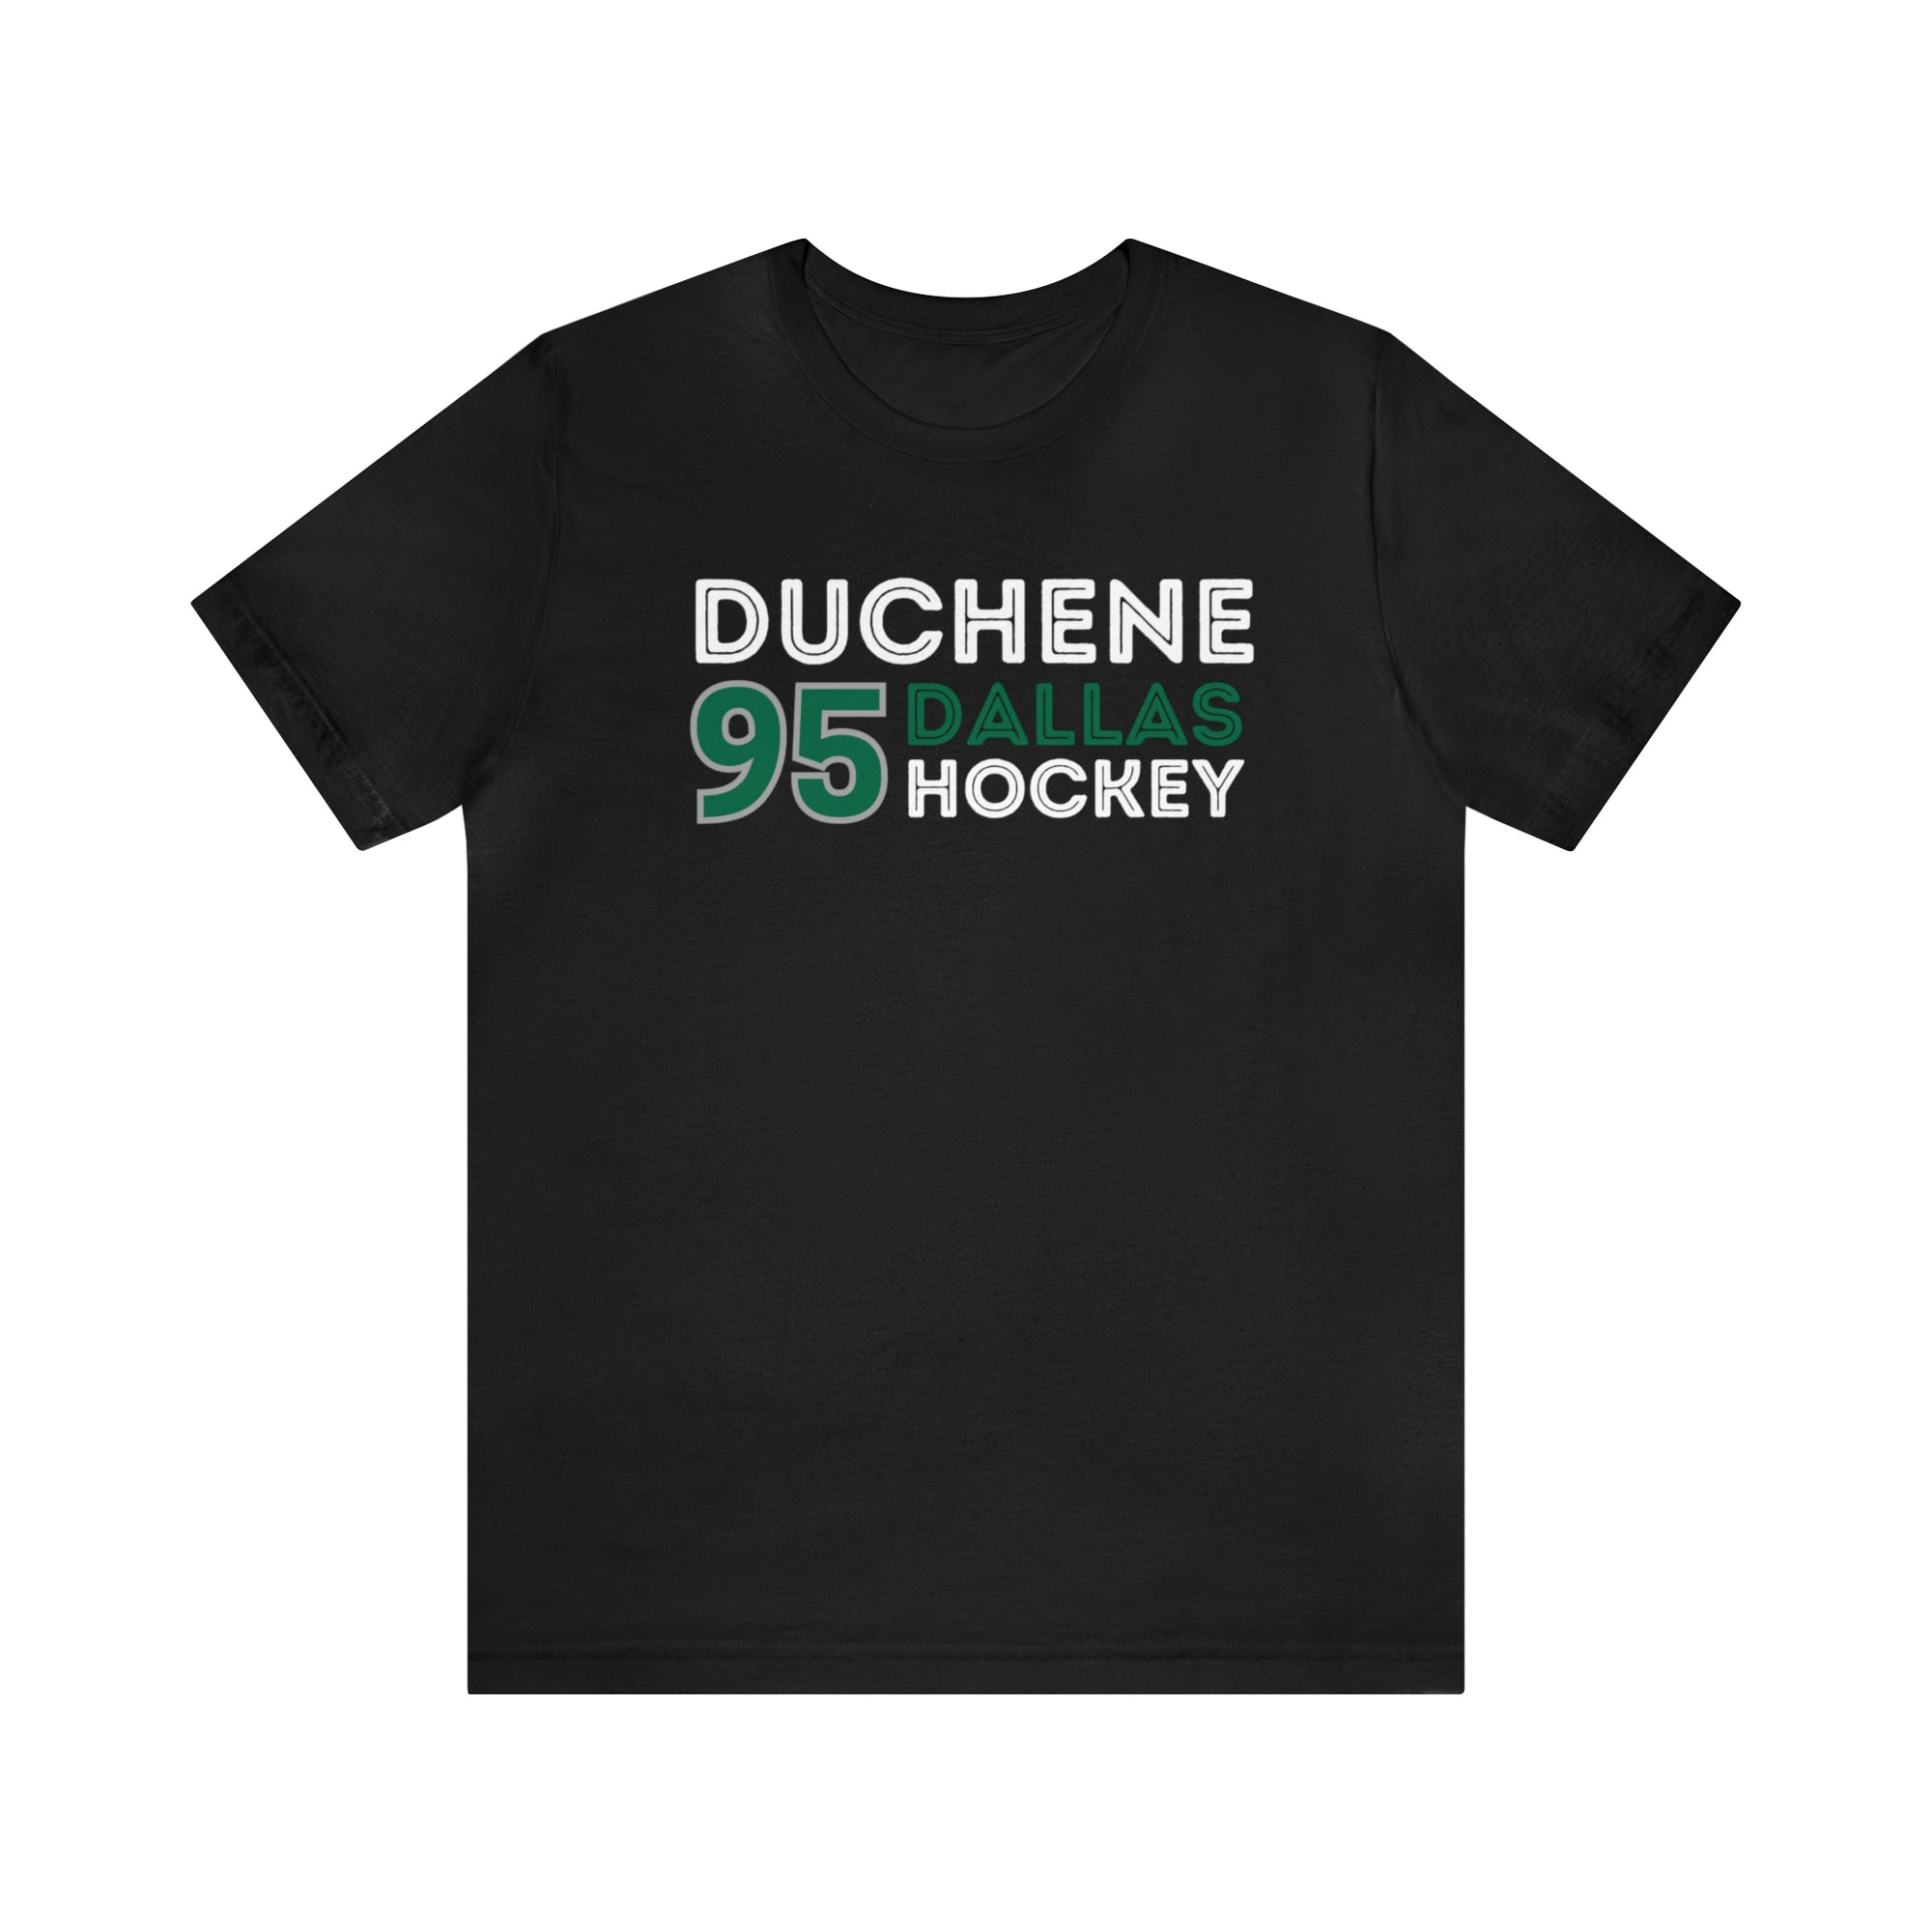 Matt Duchene T-Shirt